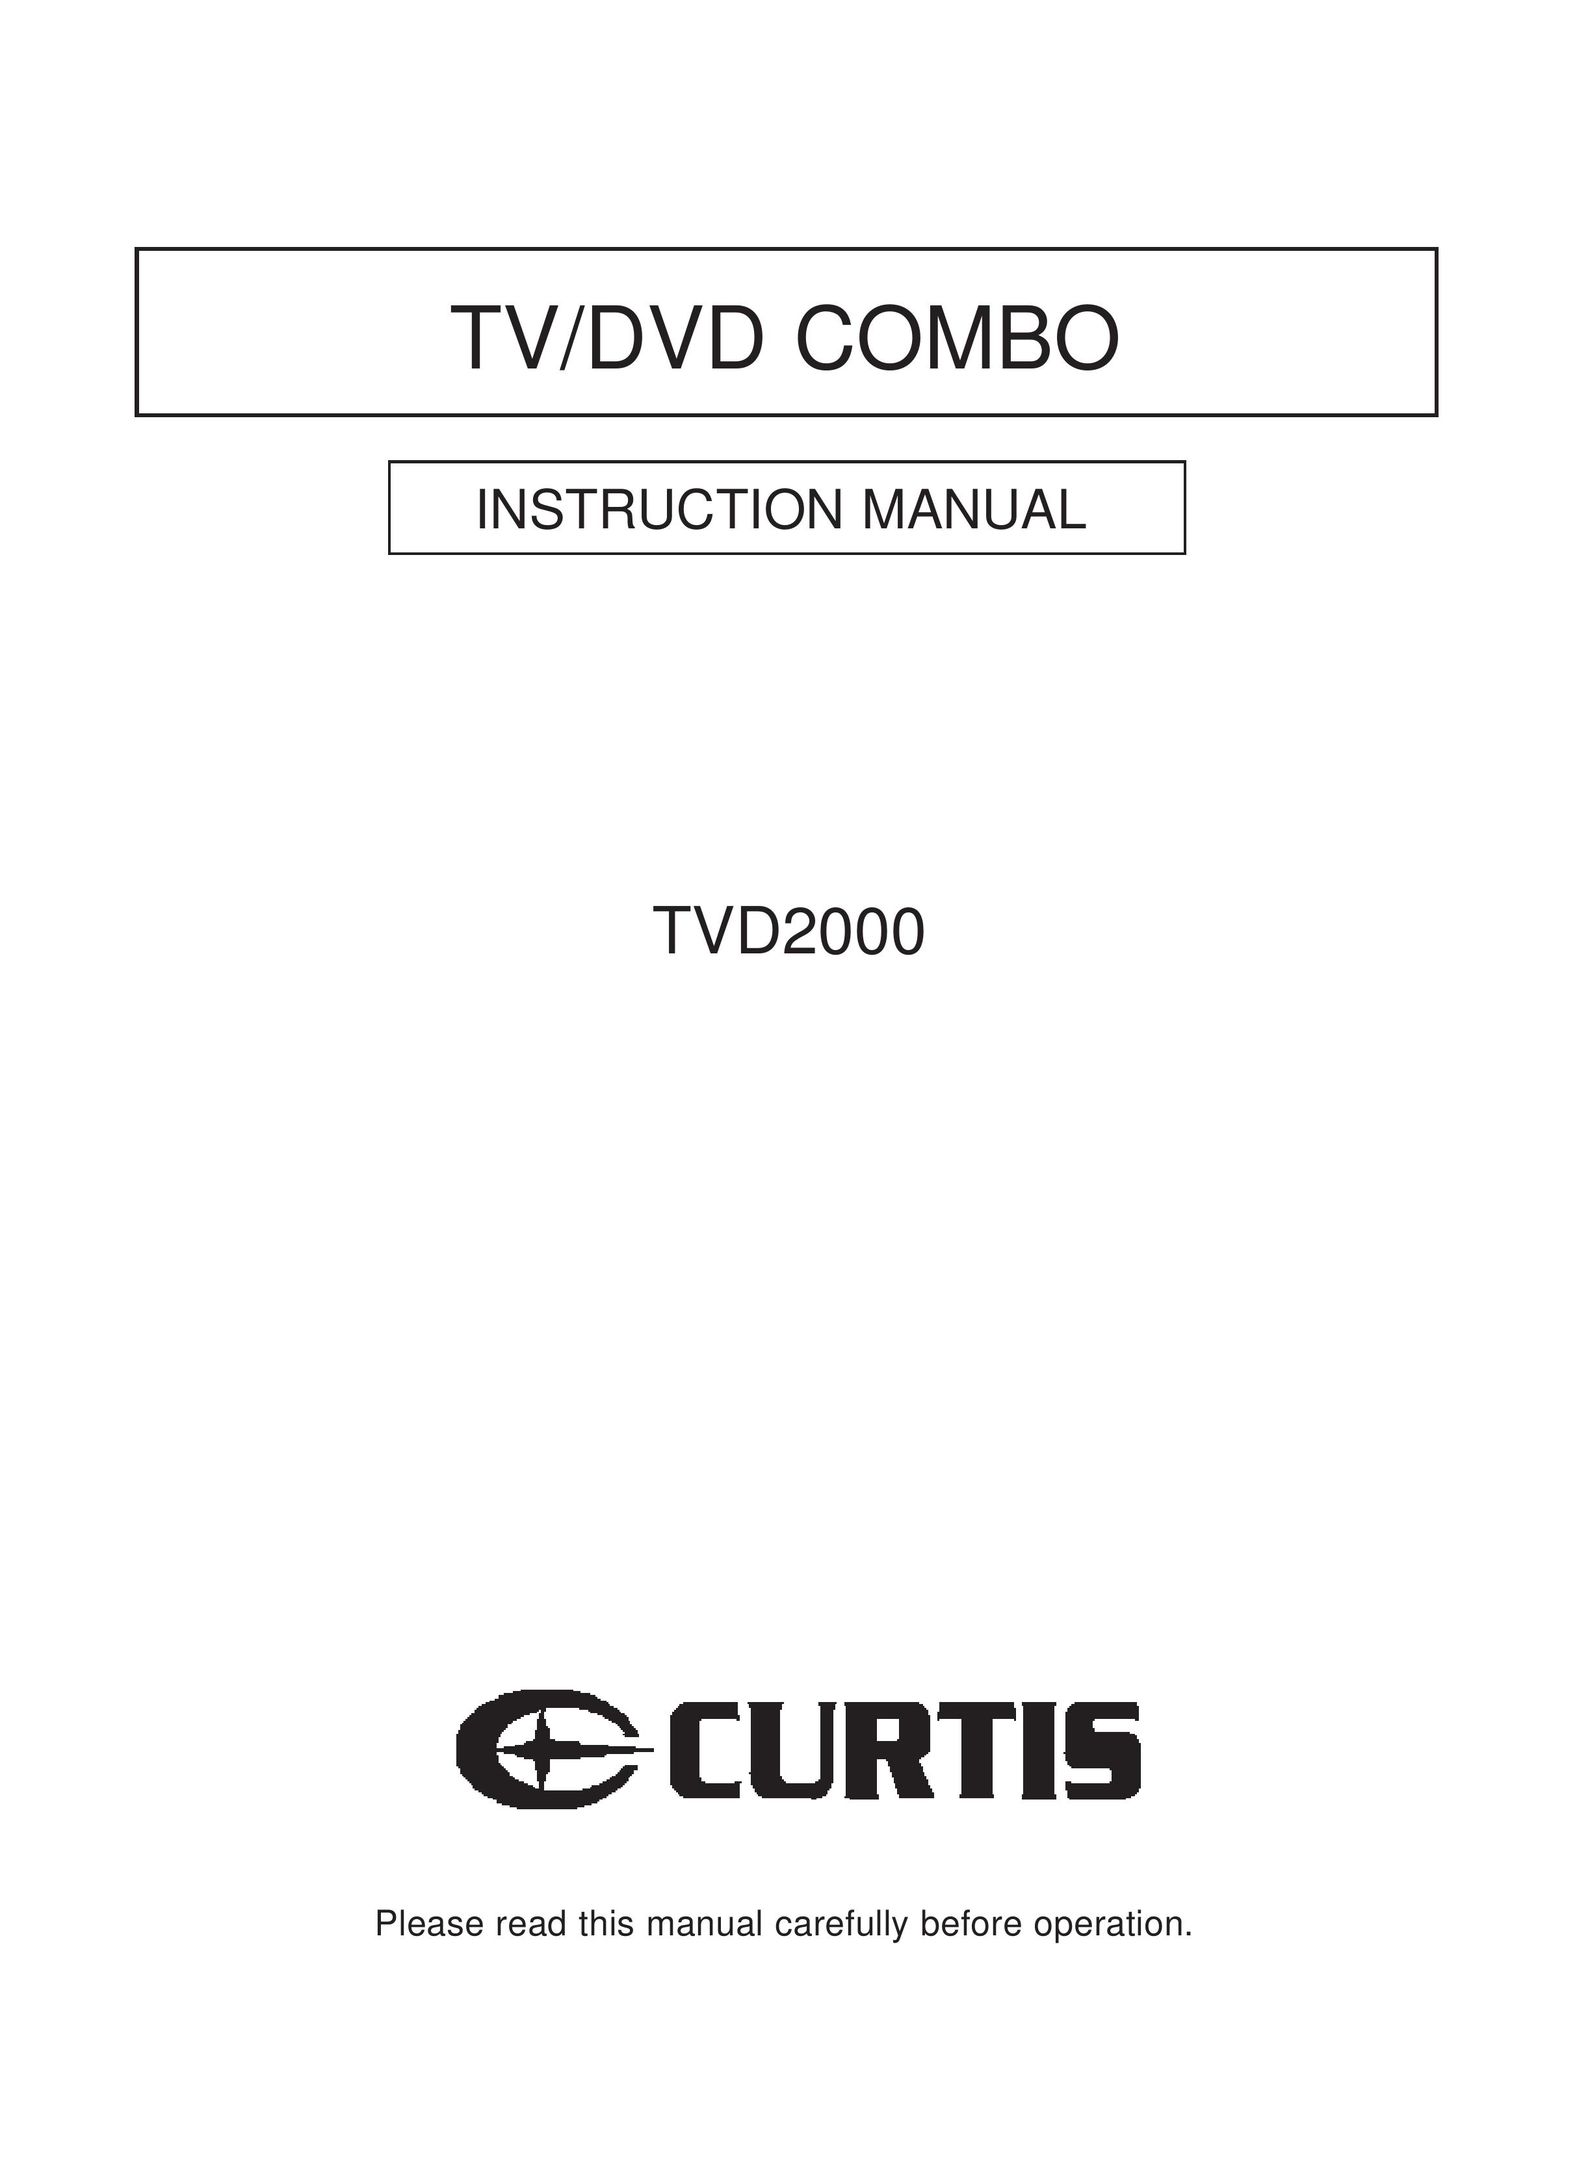 Curtis TVD2000 TV DVD Combo User Manual